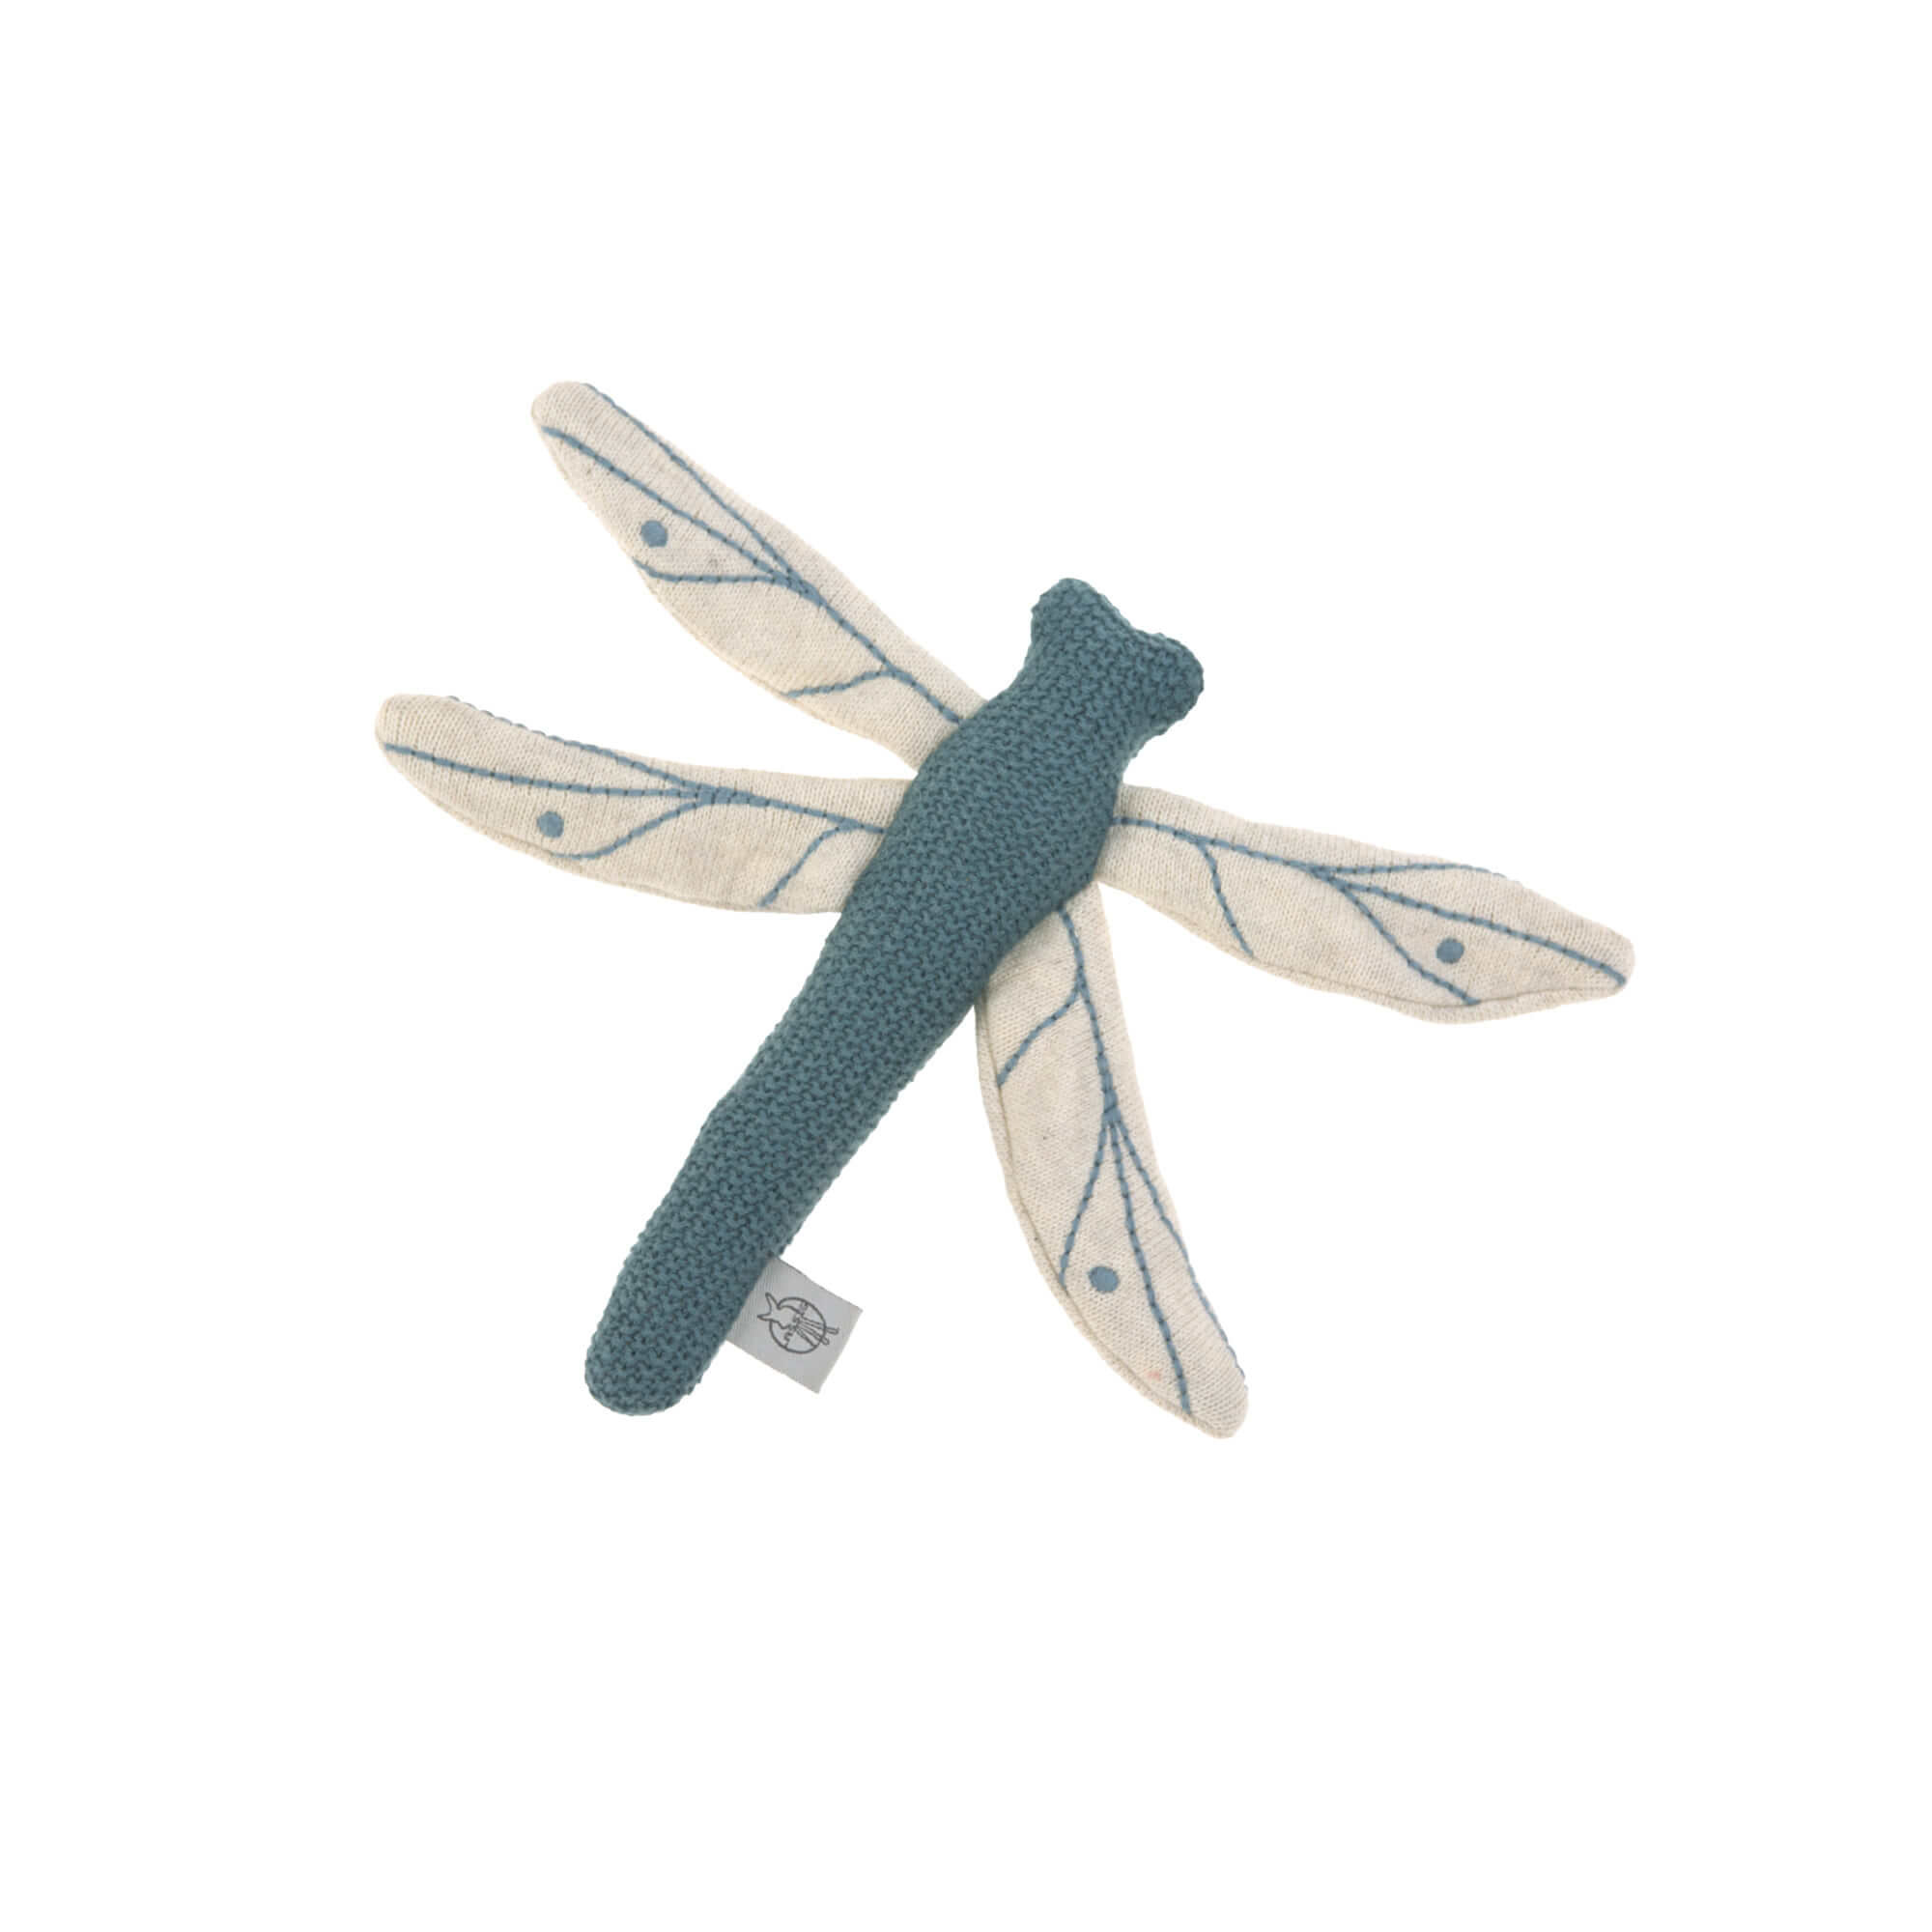 Lässig Lässig gebreid speeltje en knuffel met rammelaar knetter Garden Explorer Dragonfly blue